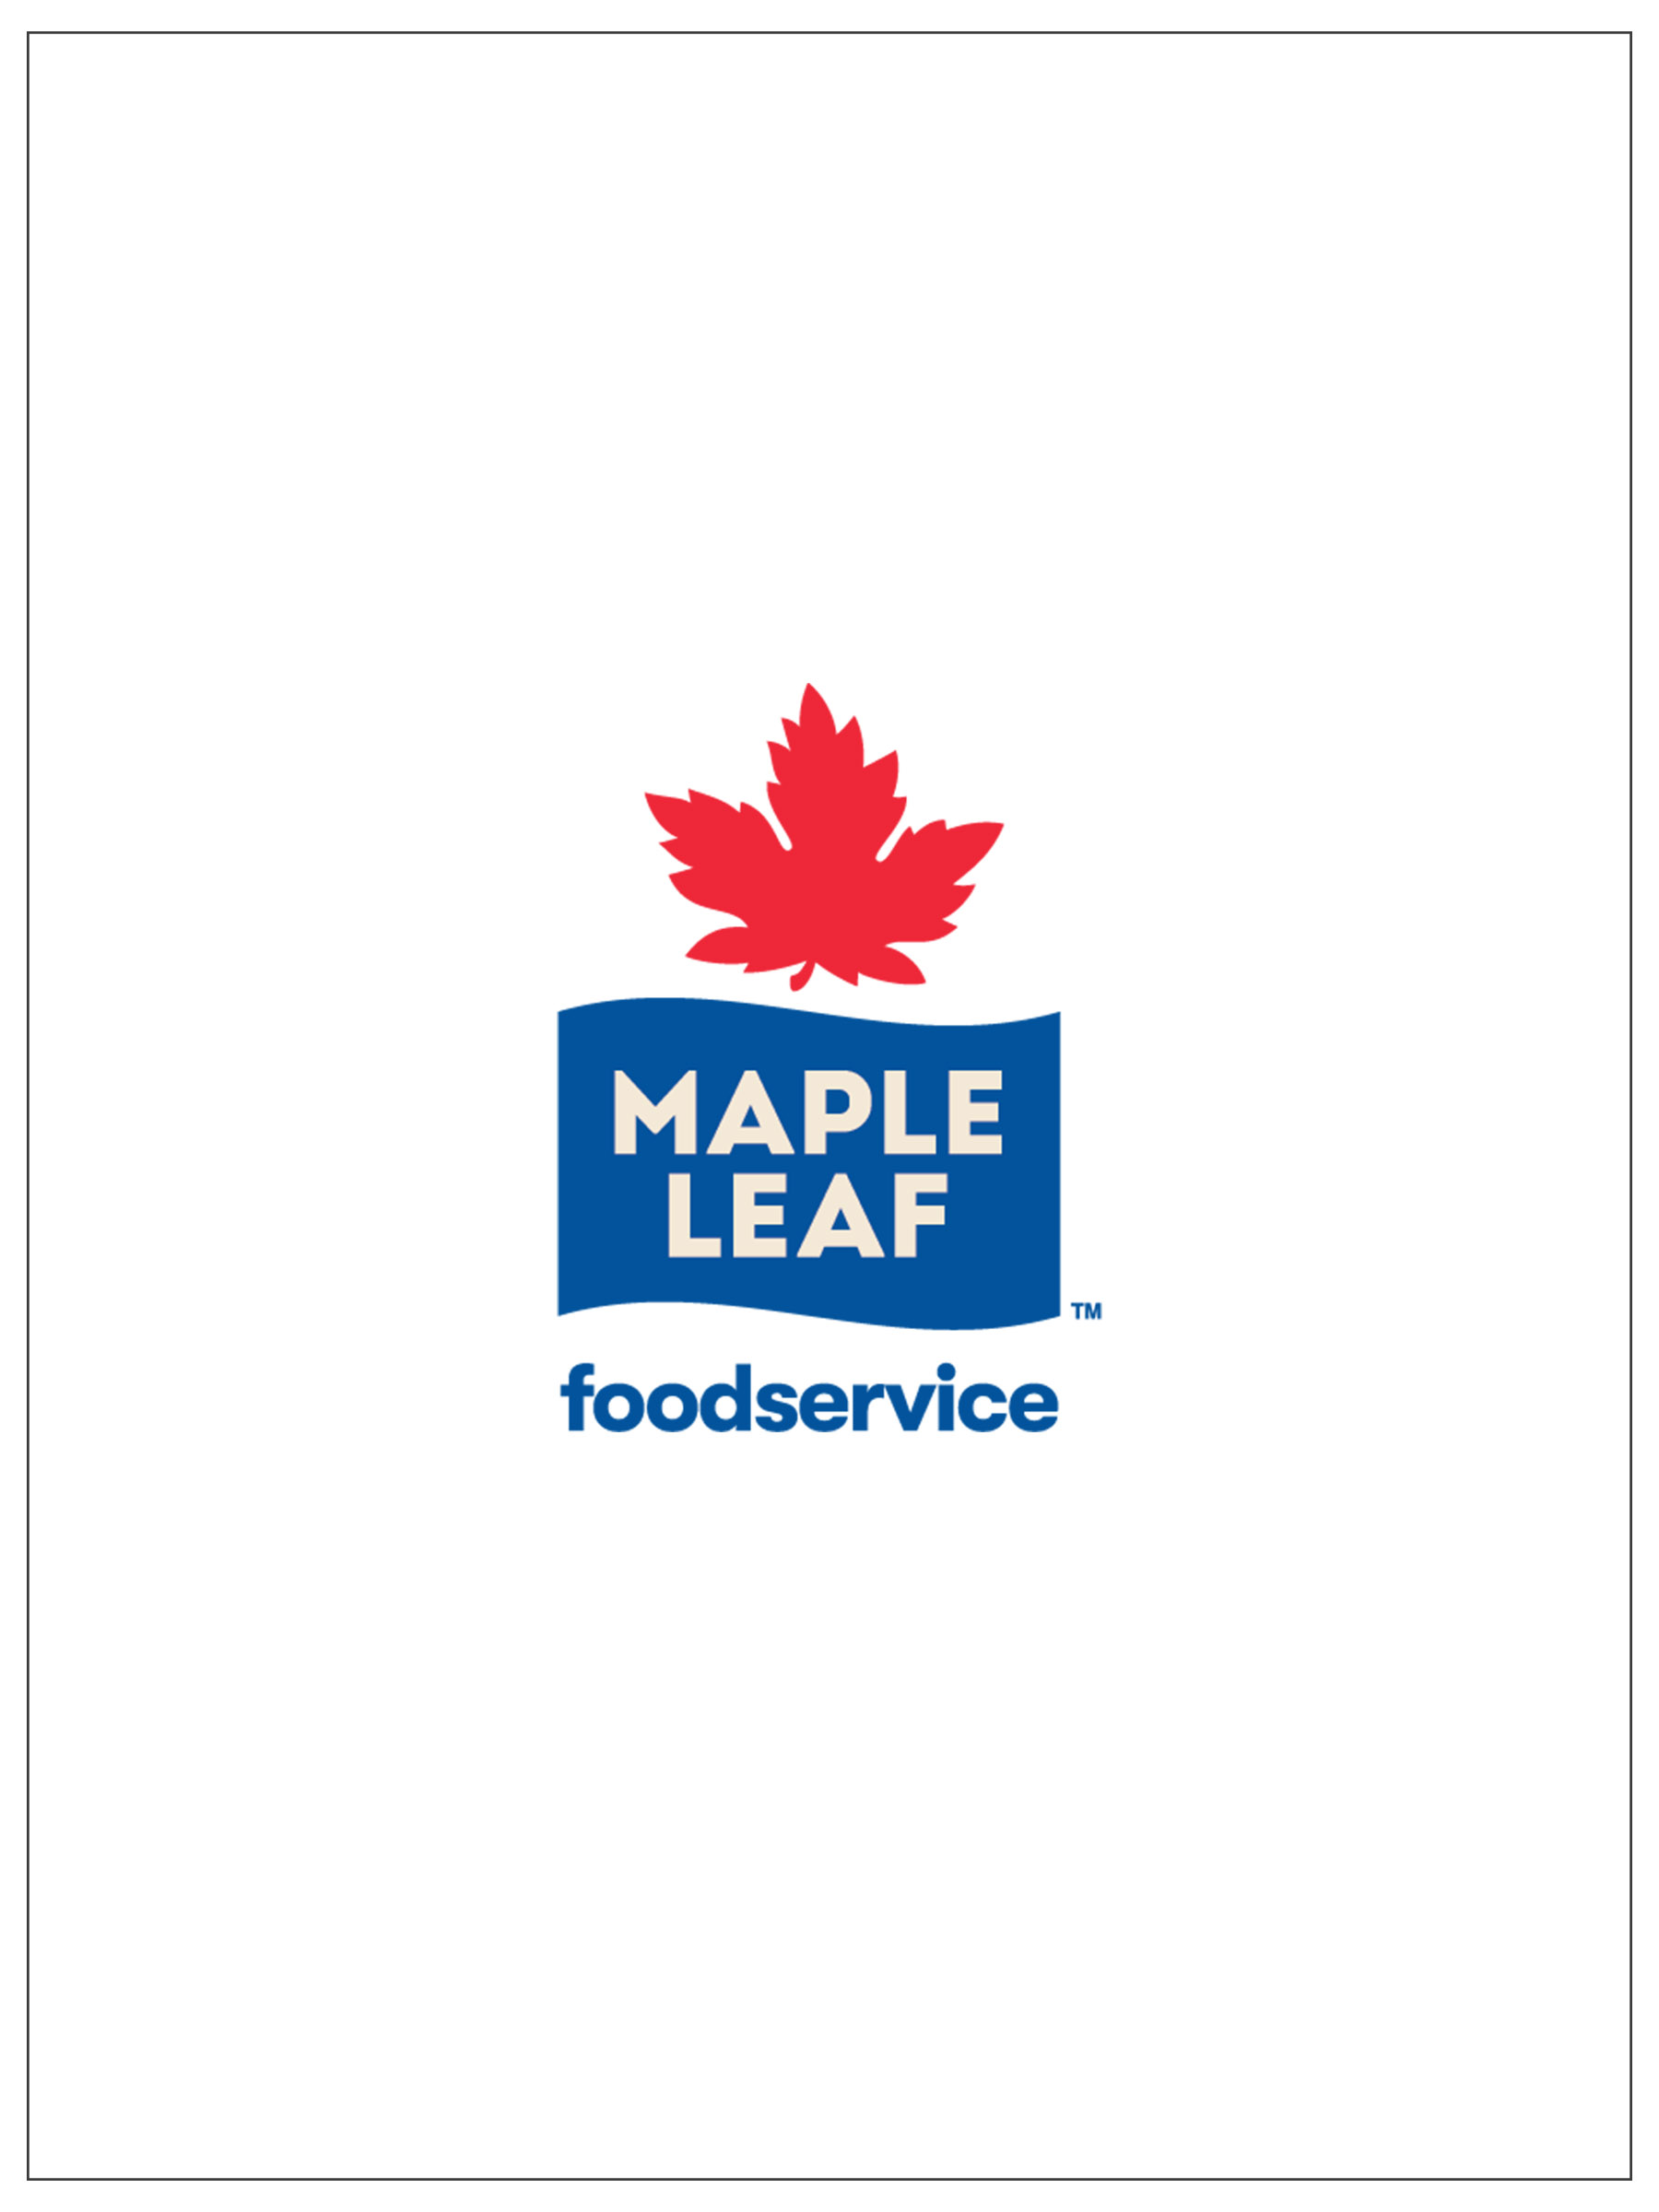 Maple Leaf Foodservice Ad